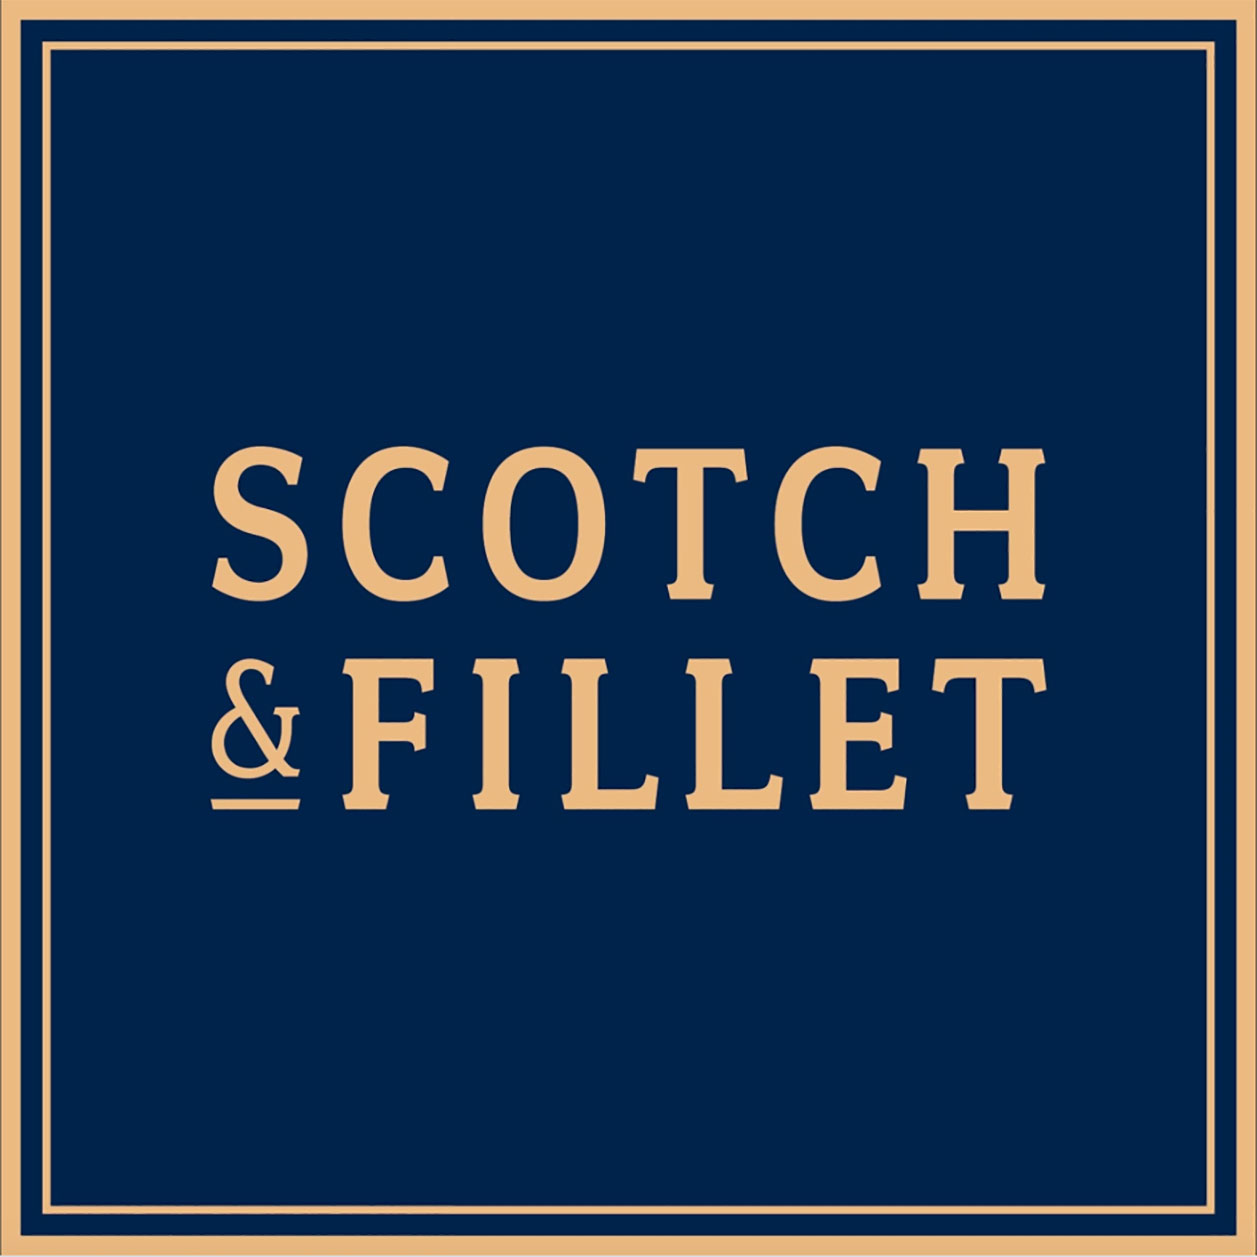 Scotch & Fillet logo